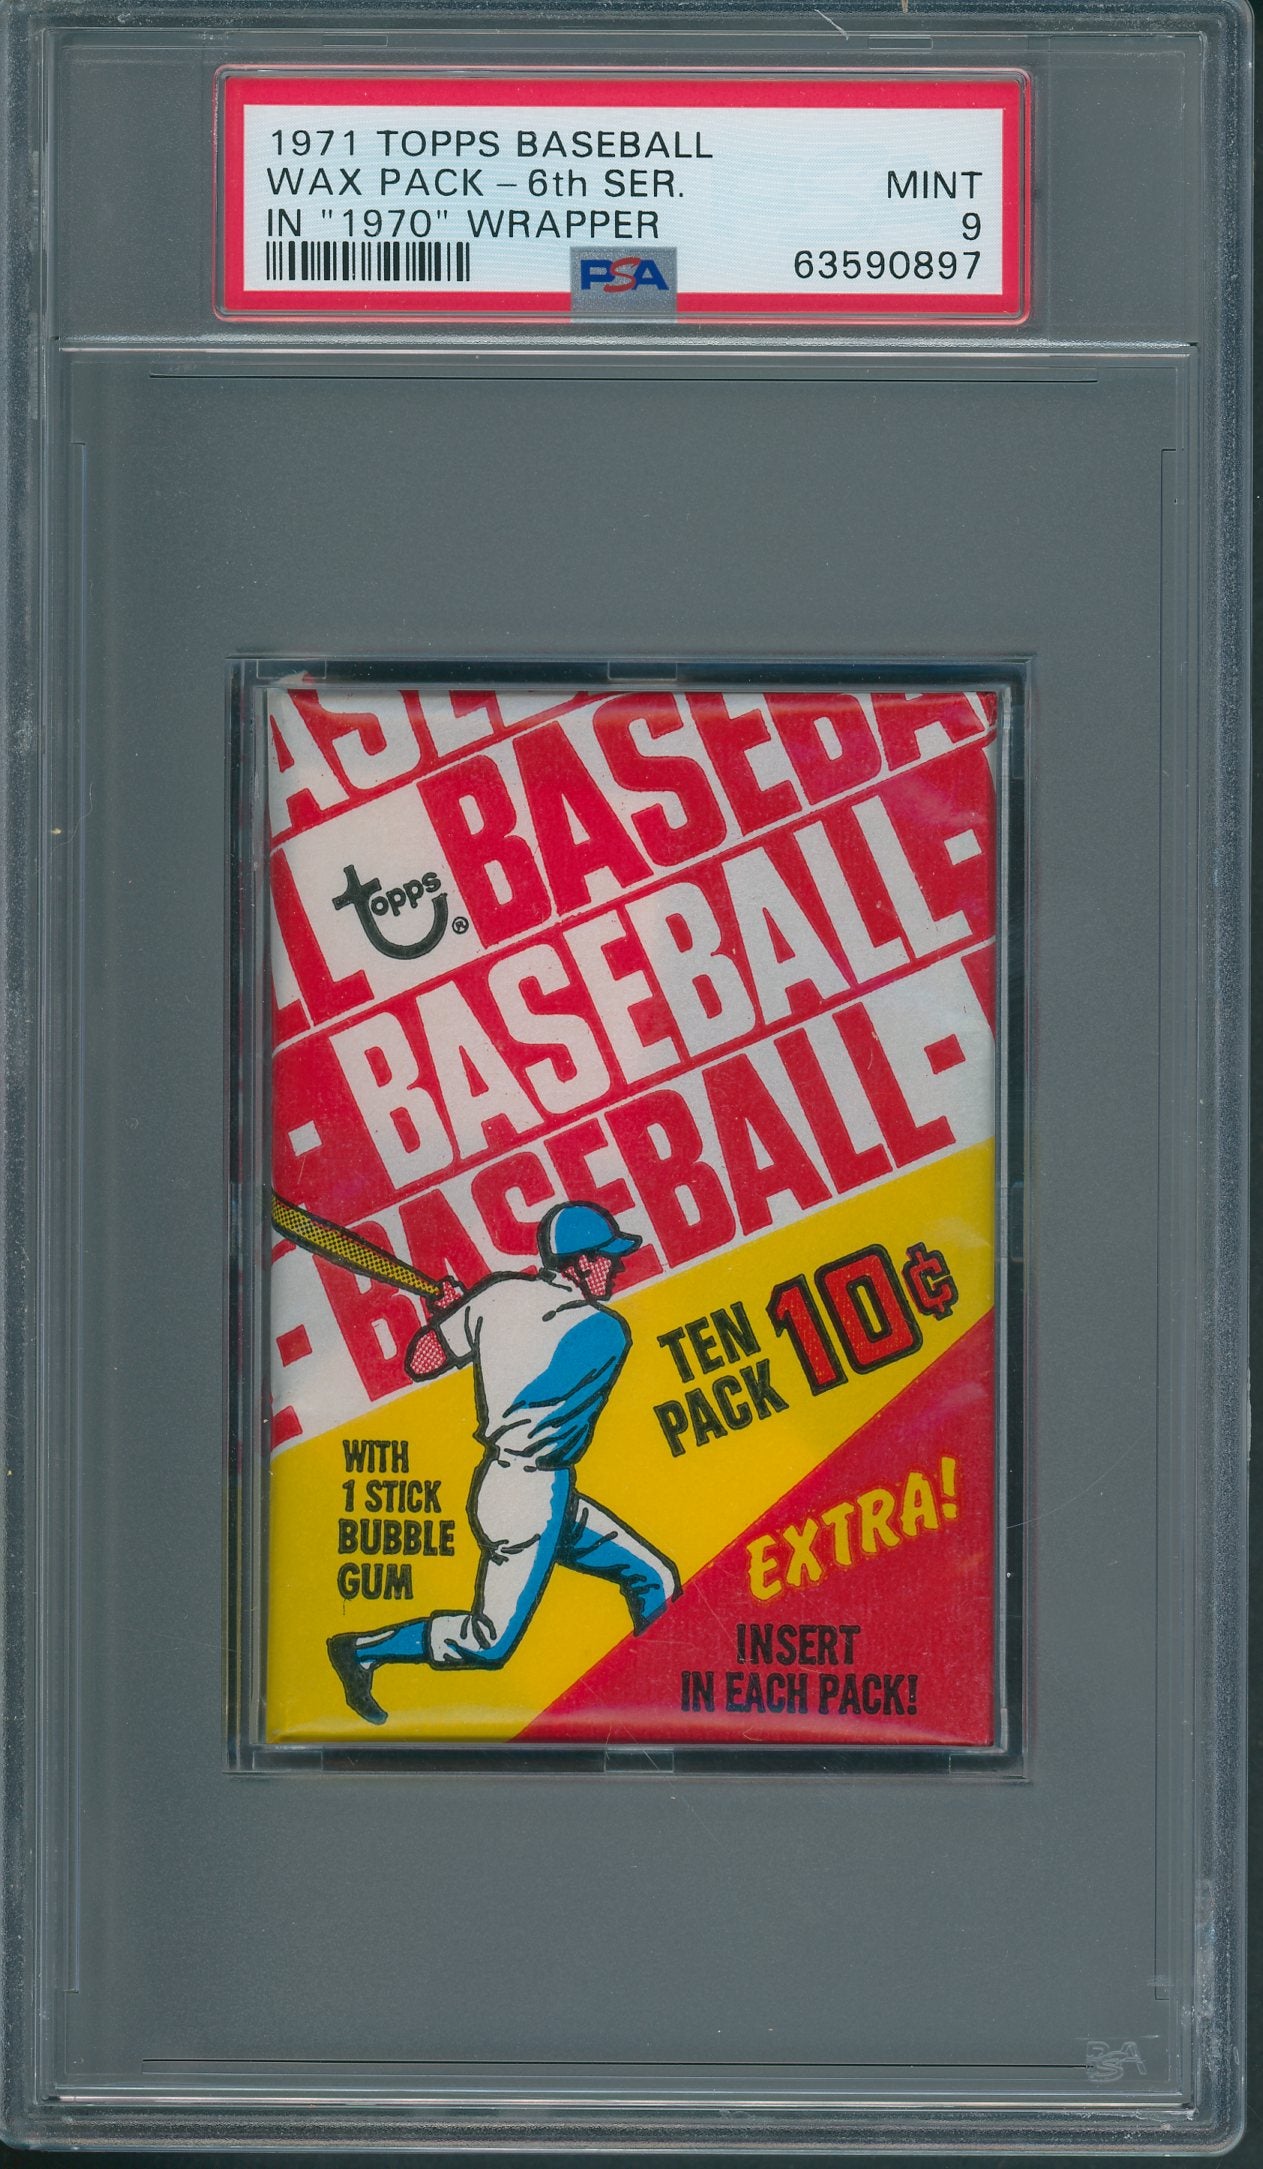 1971 Topps Baseball 6th Series Wax Pack PSA 9 (1970 Wrapper)